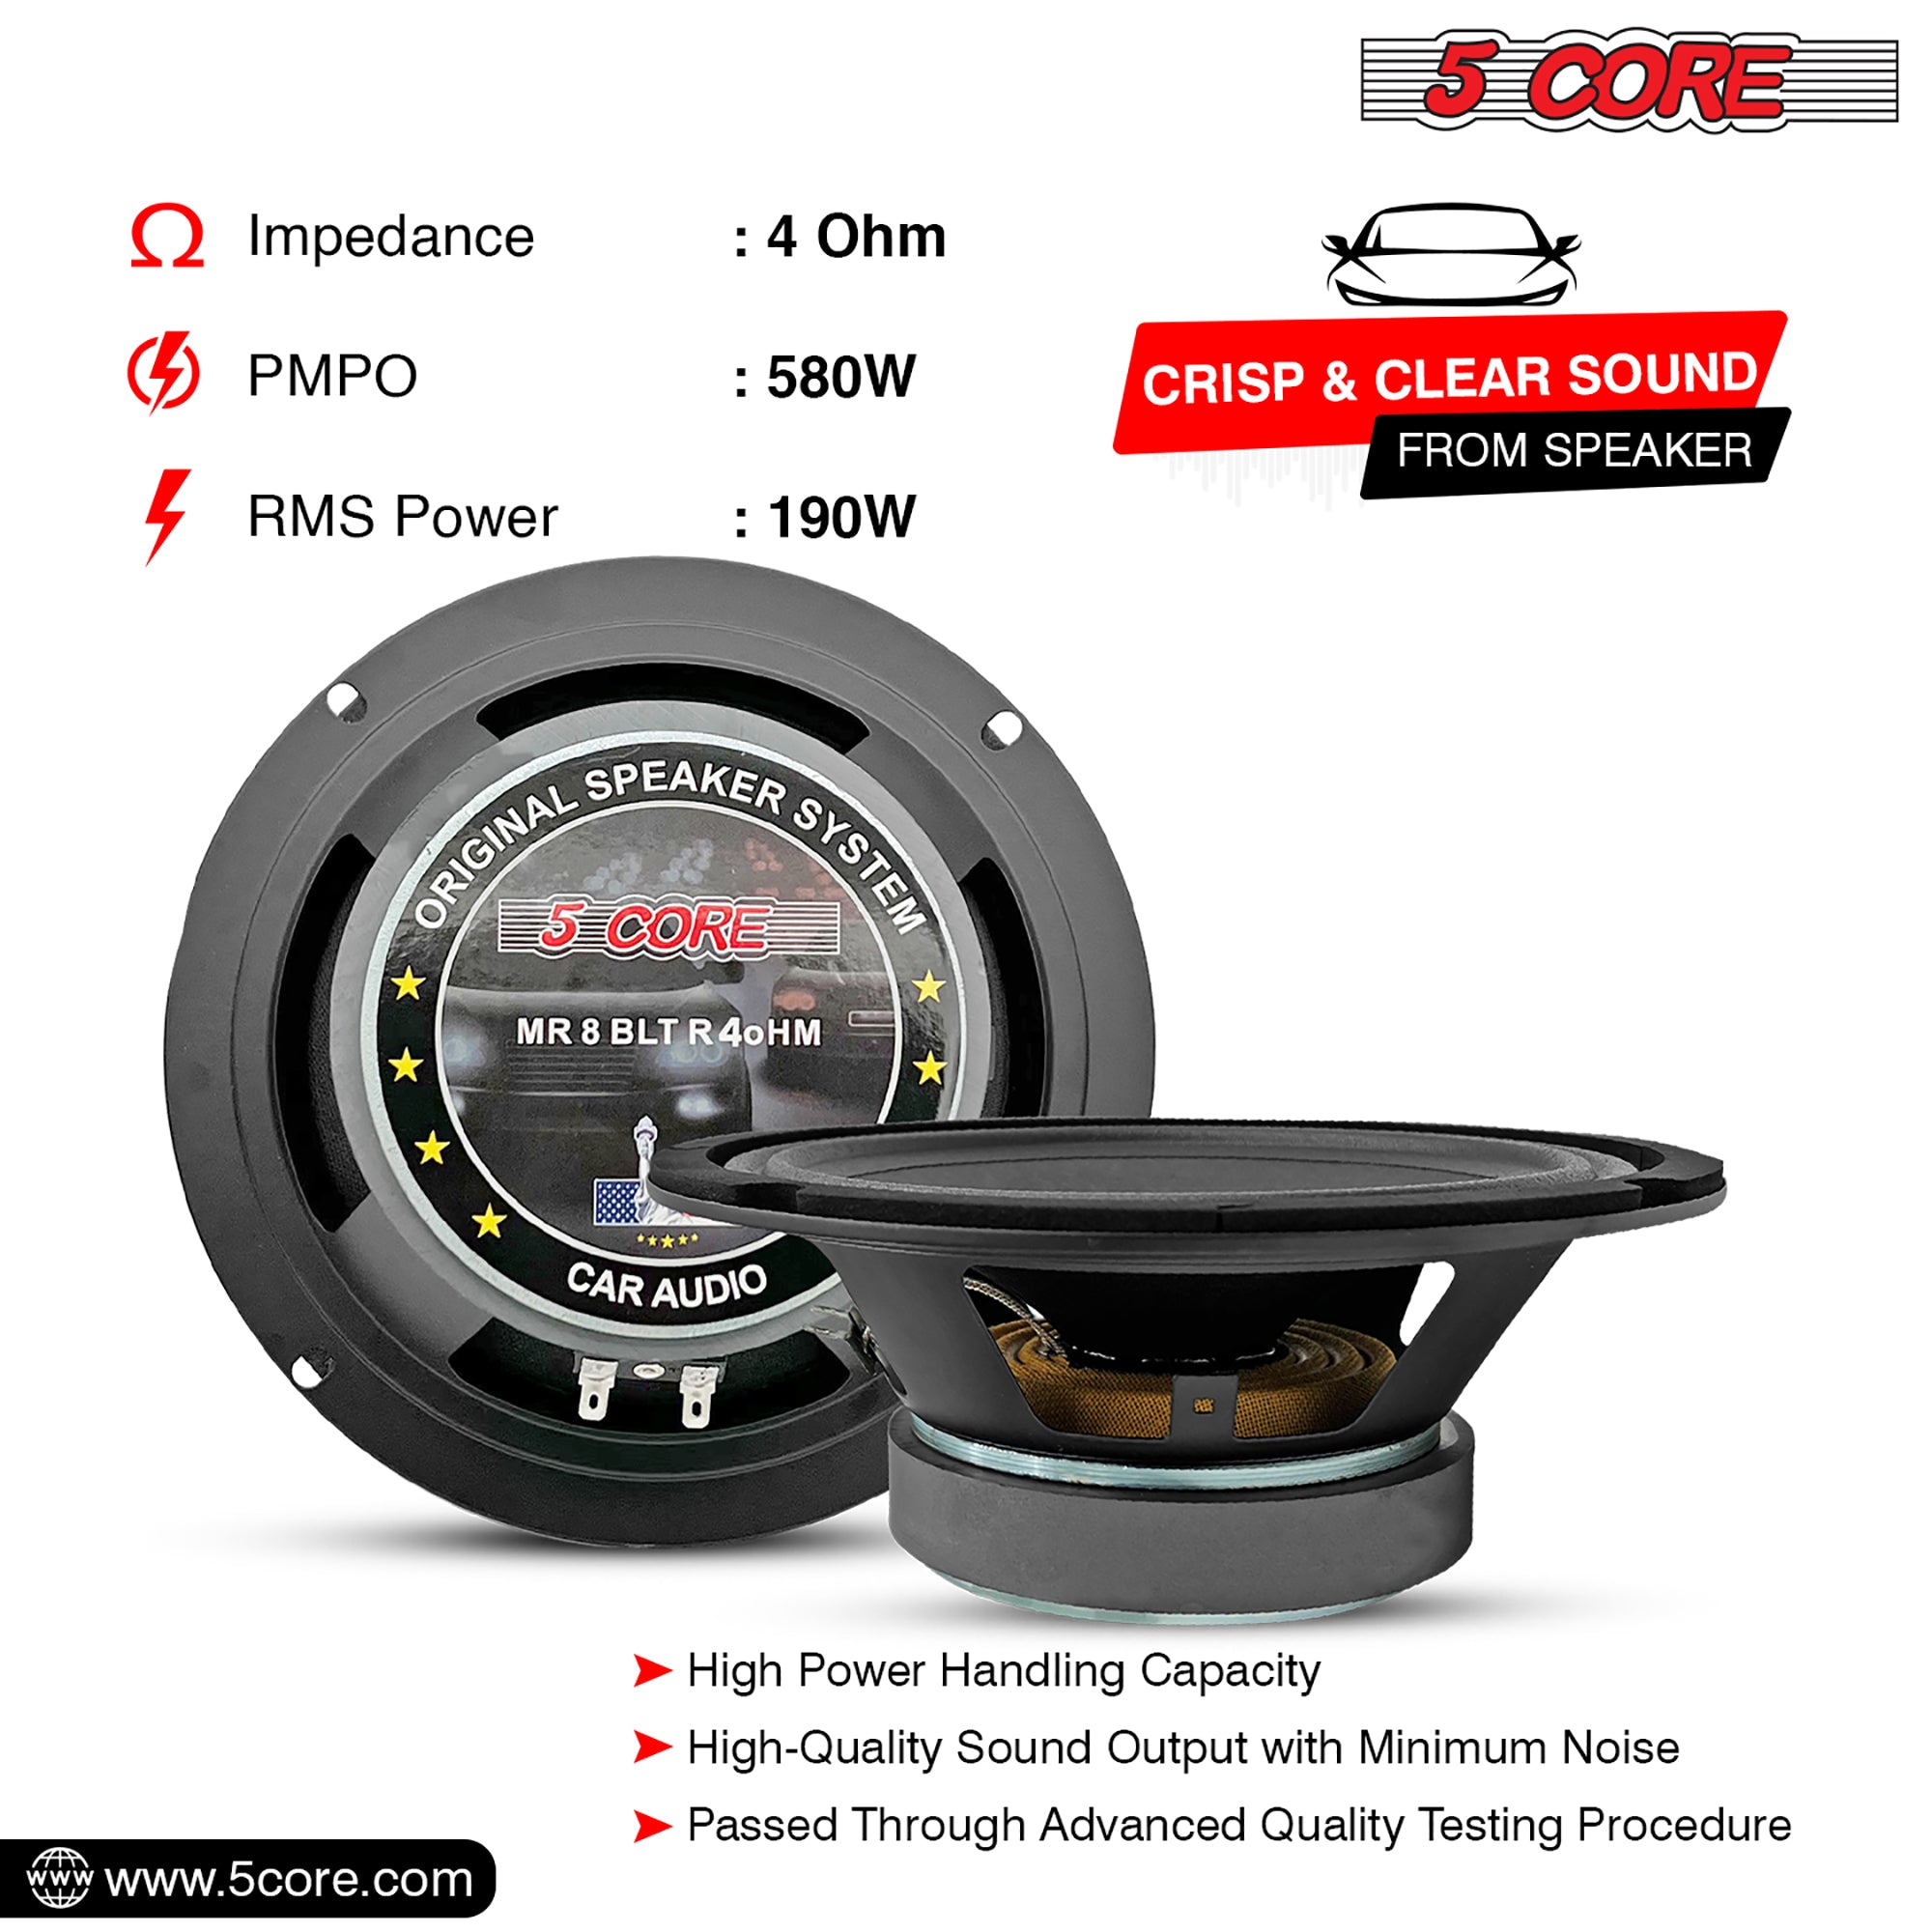 5 Core Car Speakers 8 Inch 580W PMPO 4 Ohm Midrange Speakers Built in Super Bullet Tweeters PRO Car Audio Subwoofer - MR 8 BLT R 4oHM